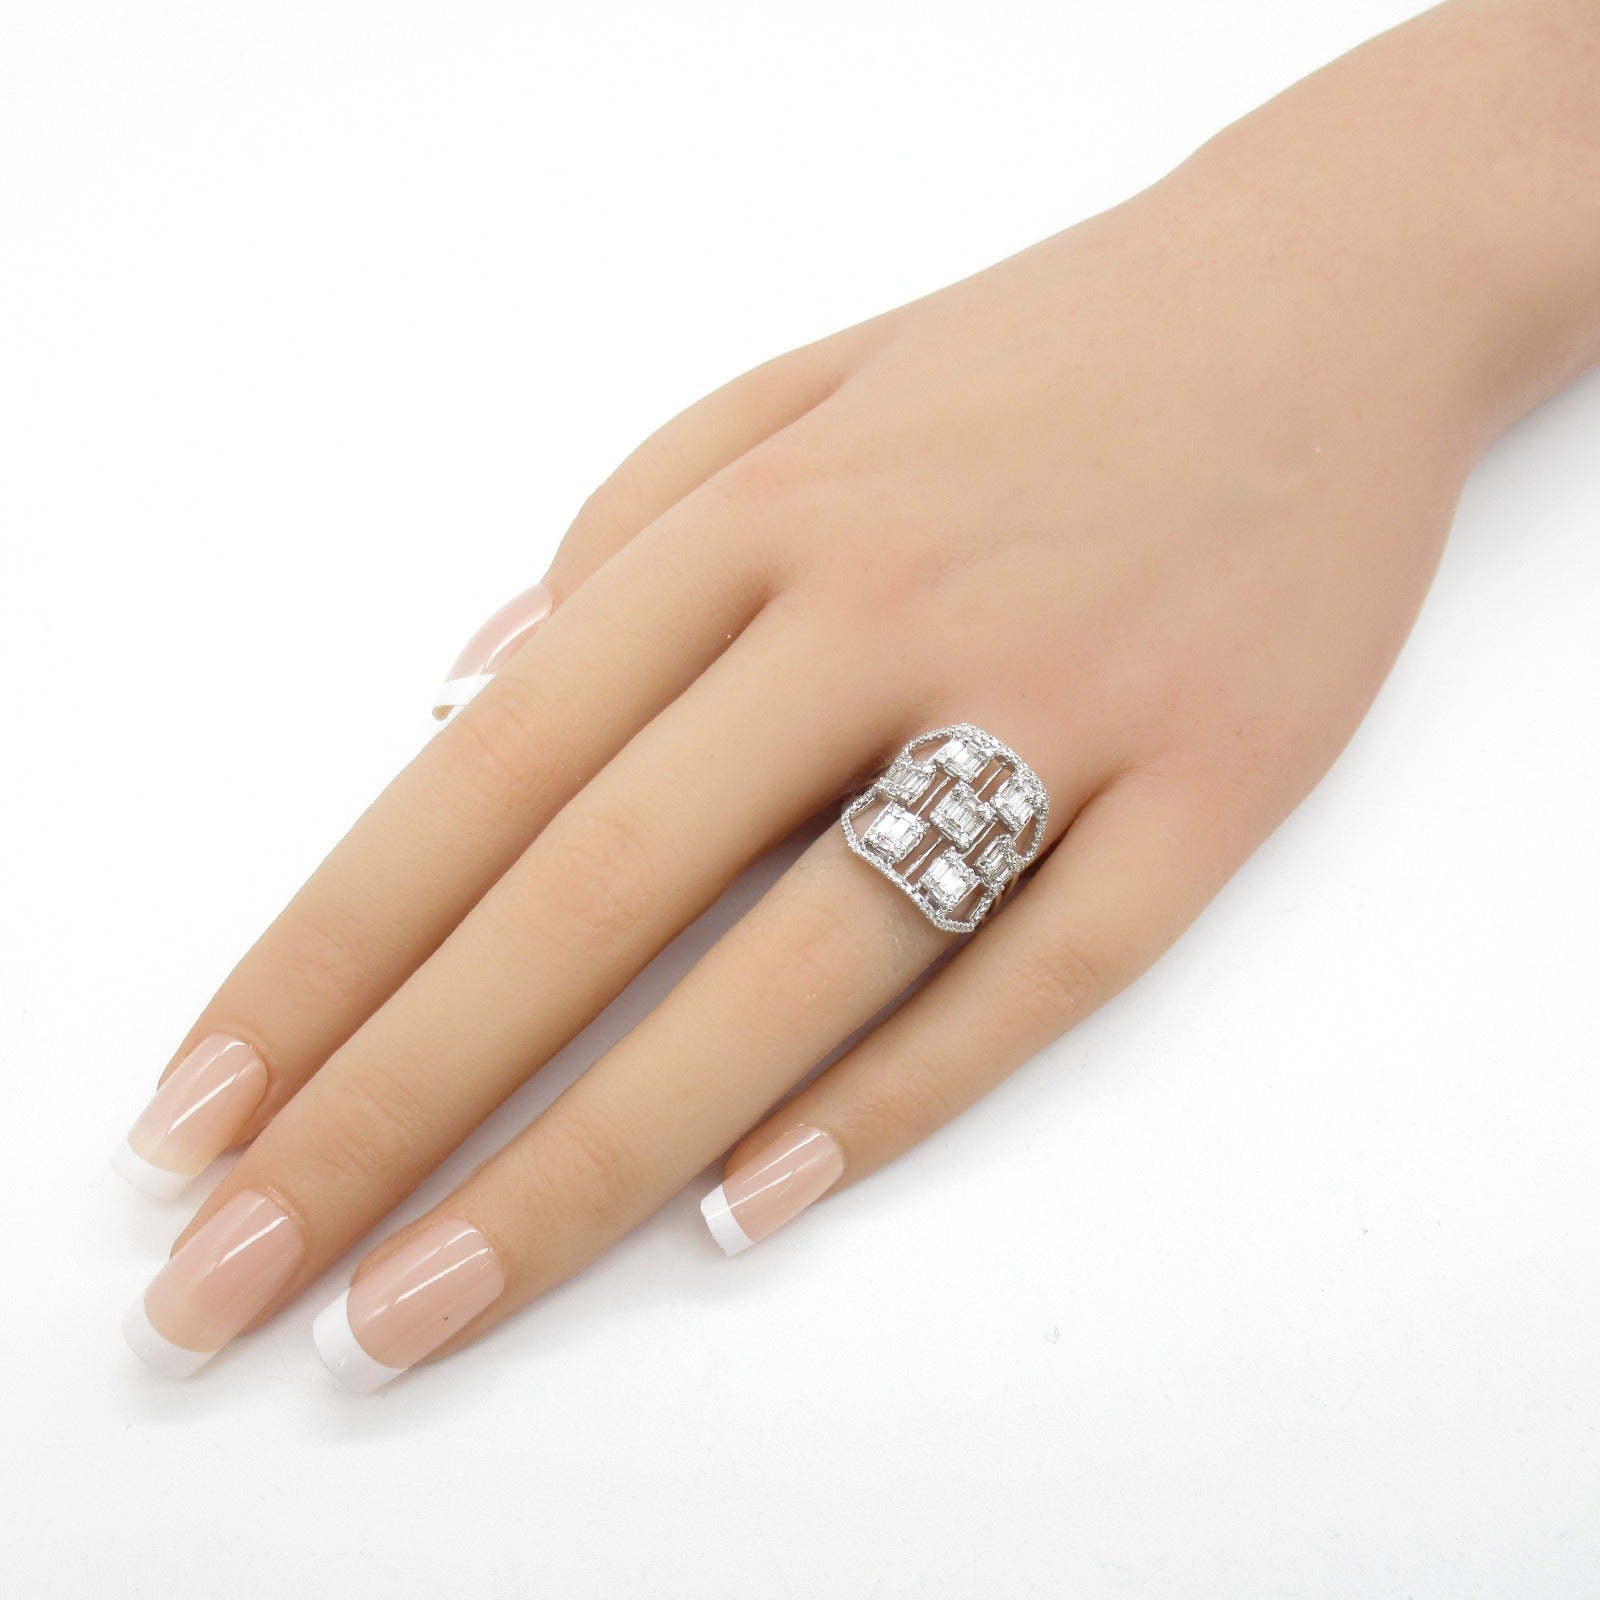 Jewelry Jewelry Diamond Ring Ring Ring Jewelry K18WG (White G) Diamond  Clear Diamond 5.3g